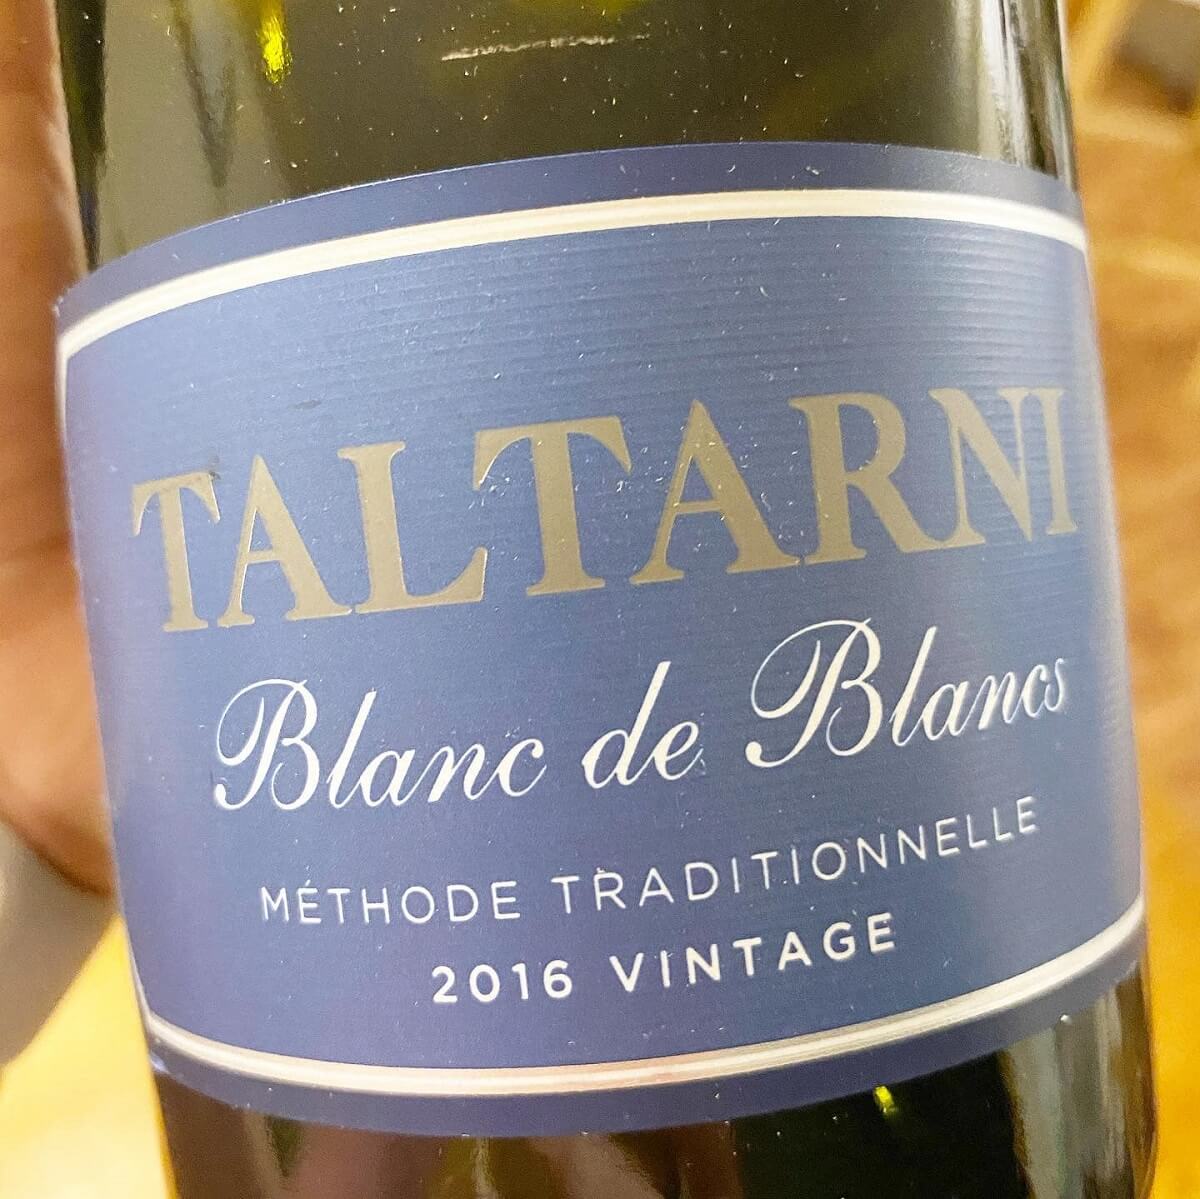 Taltarni Blanc de Blancs 2016 & 2015  Vintage